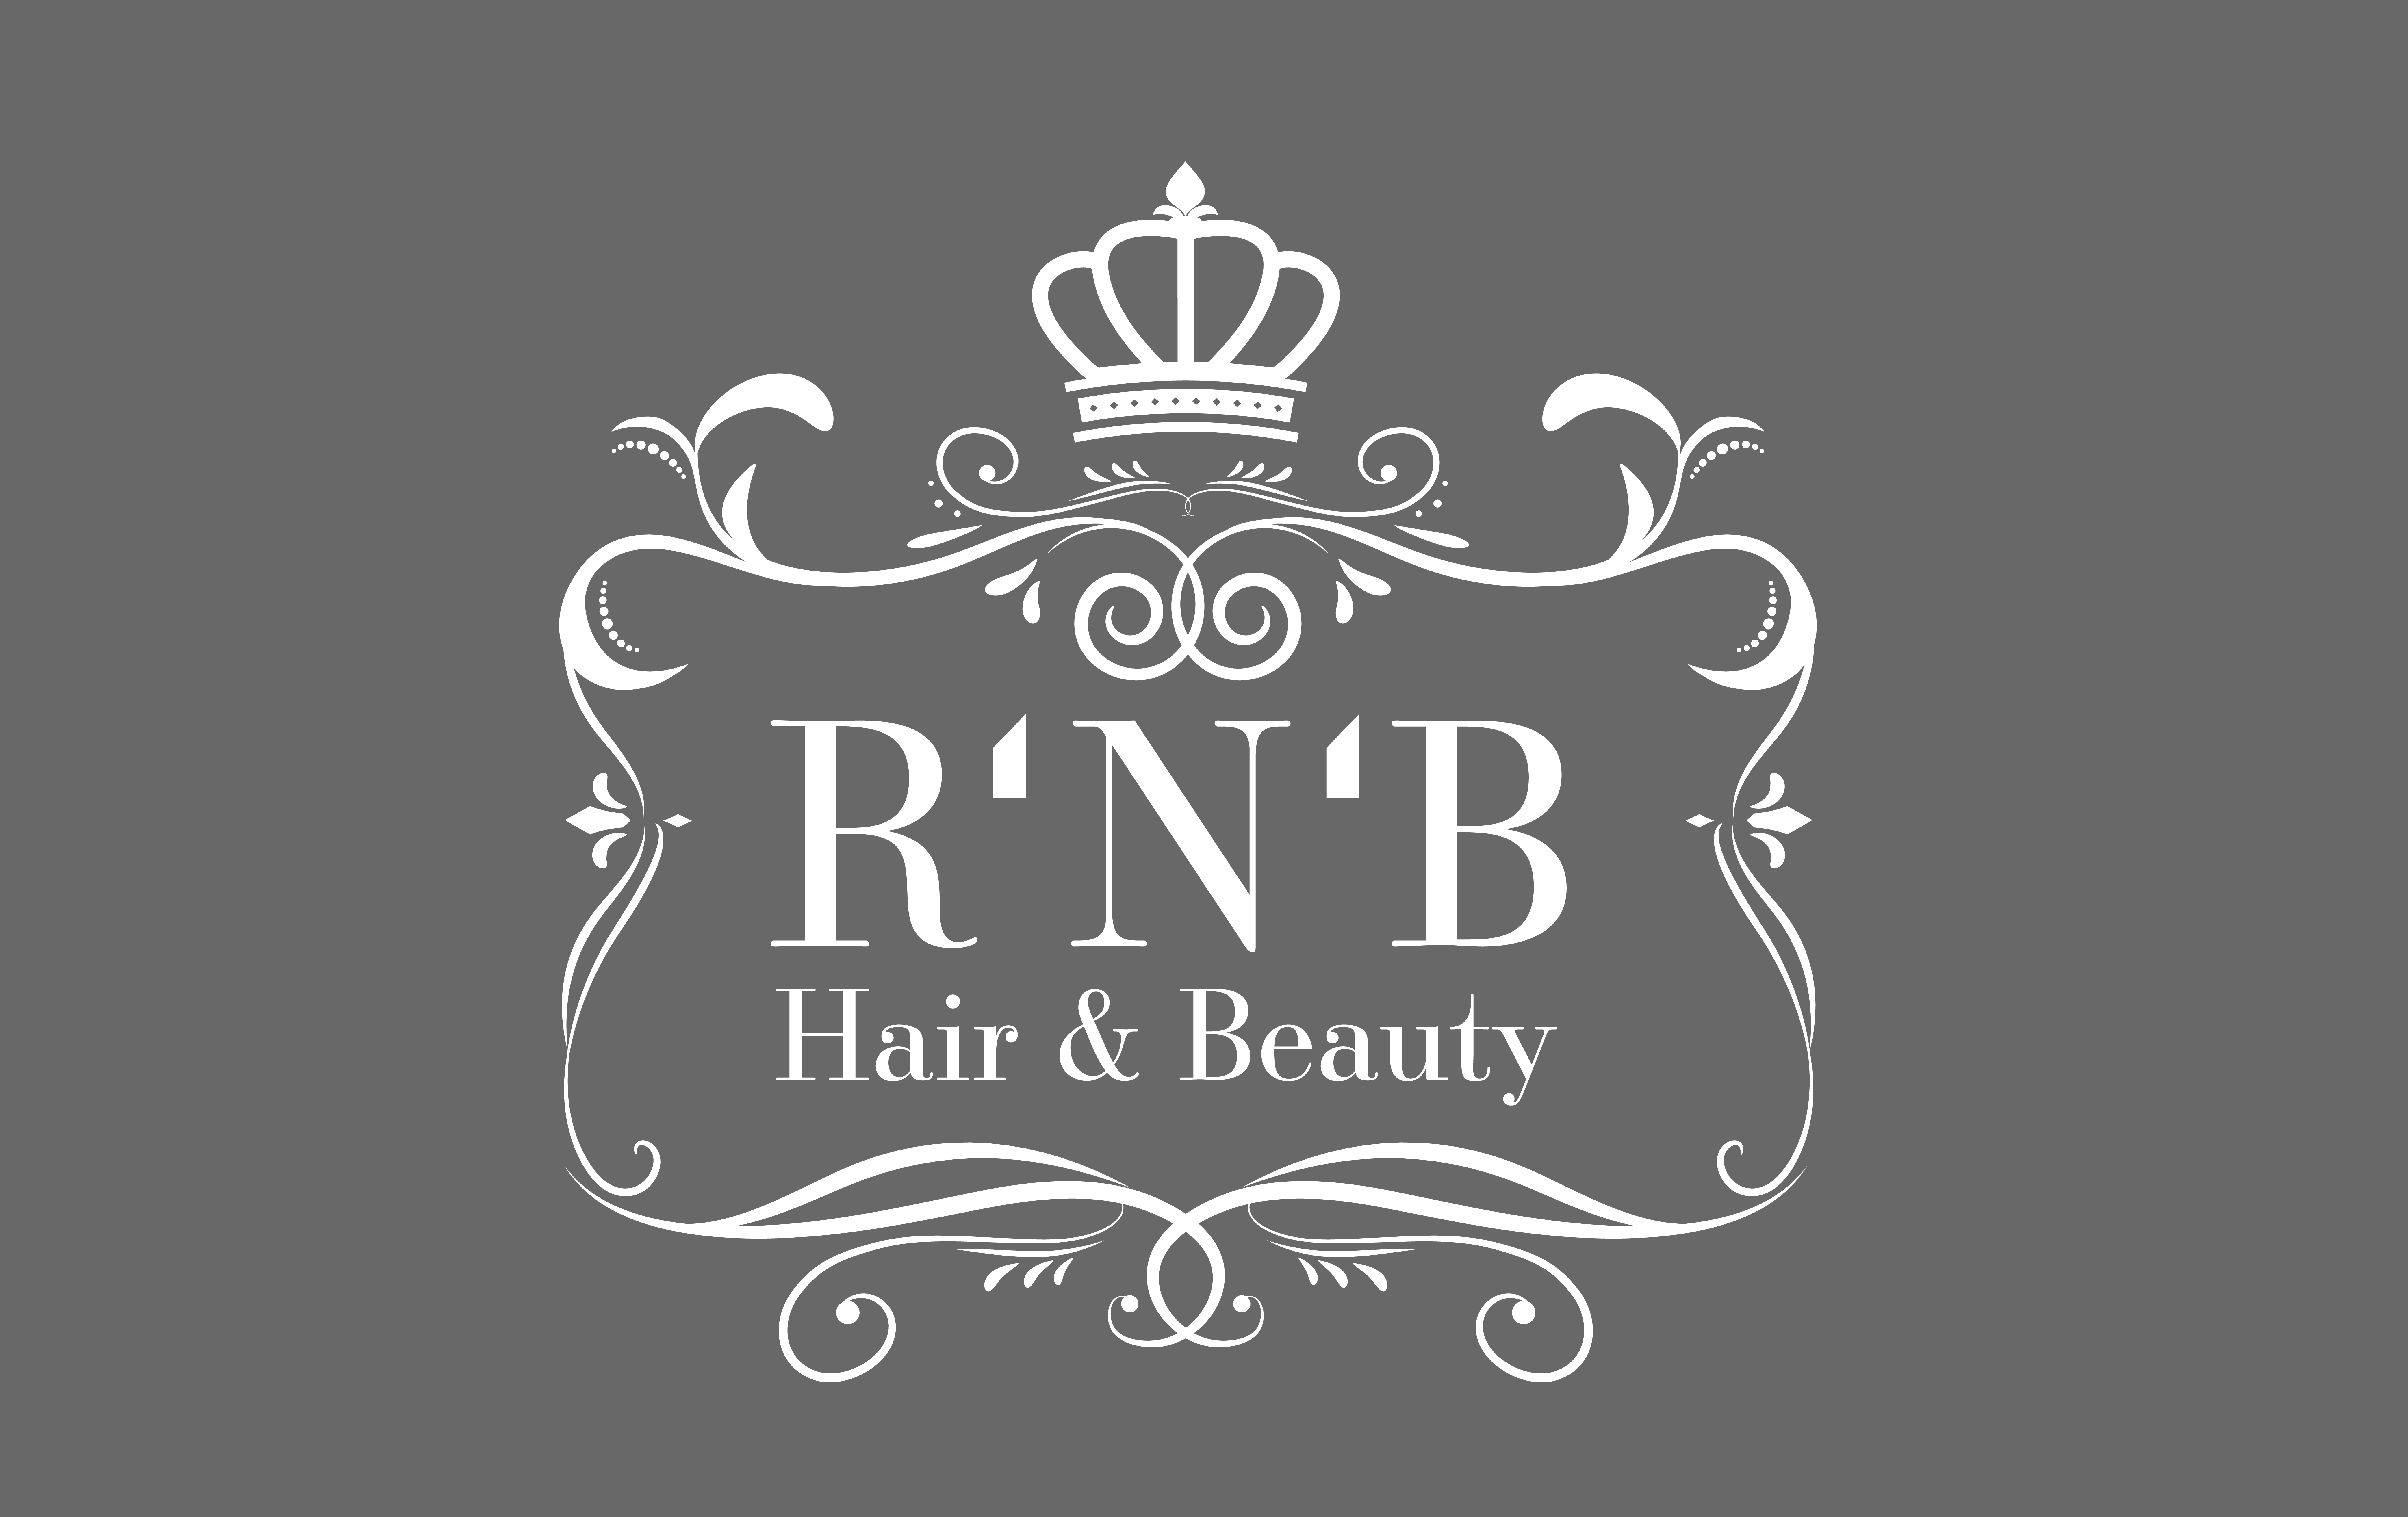 R'n'B Hair & Beauty - Salon – Dunfermline